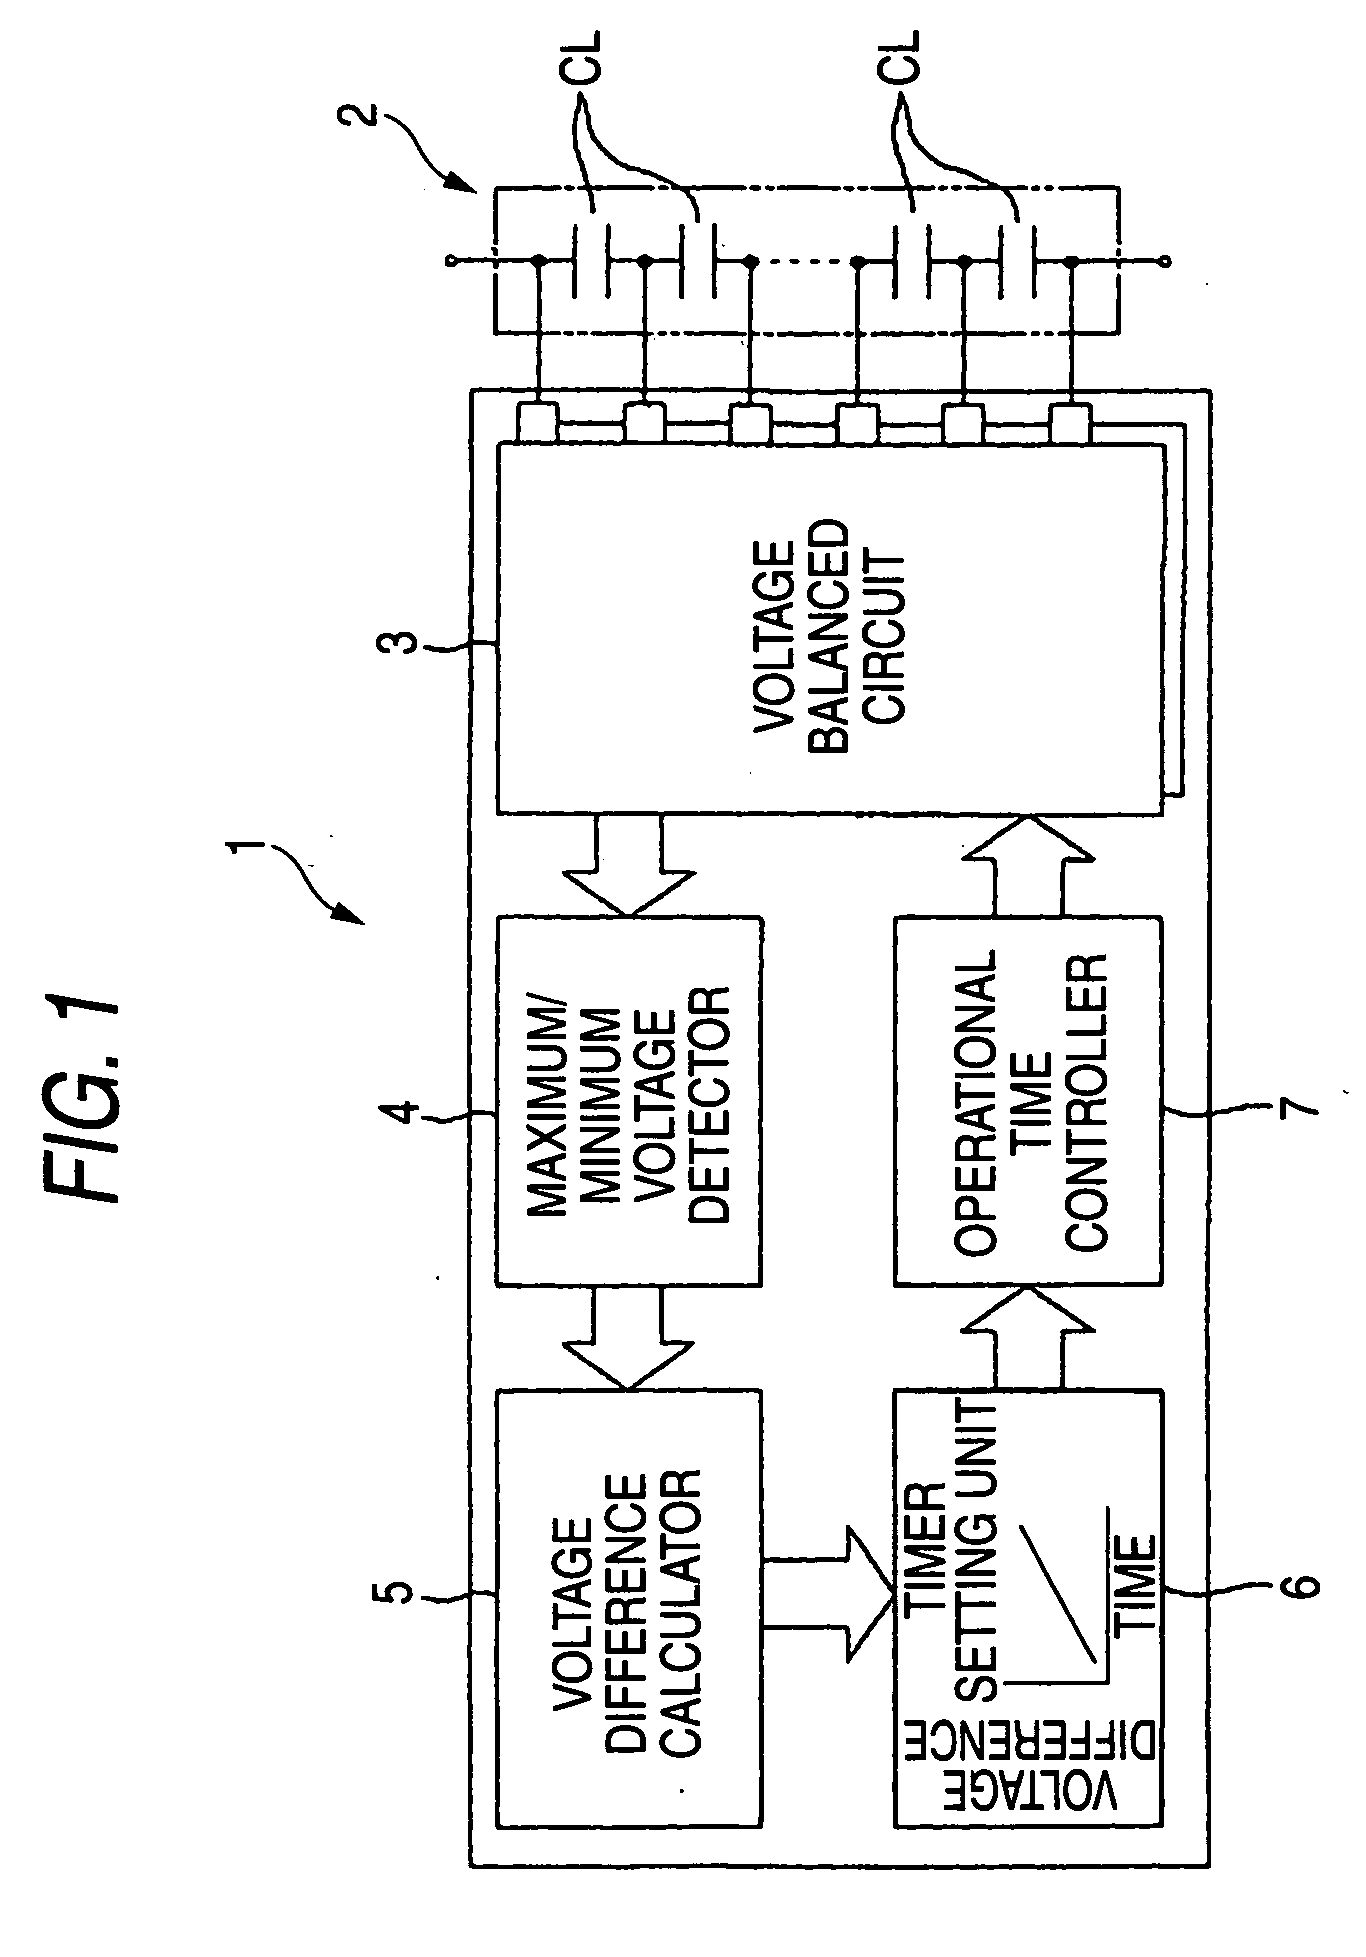 Voltage equalization control system of accumulator